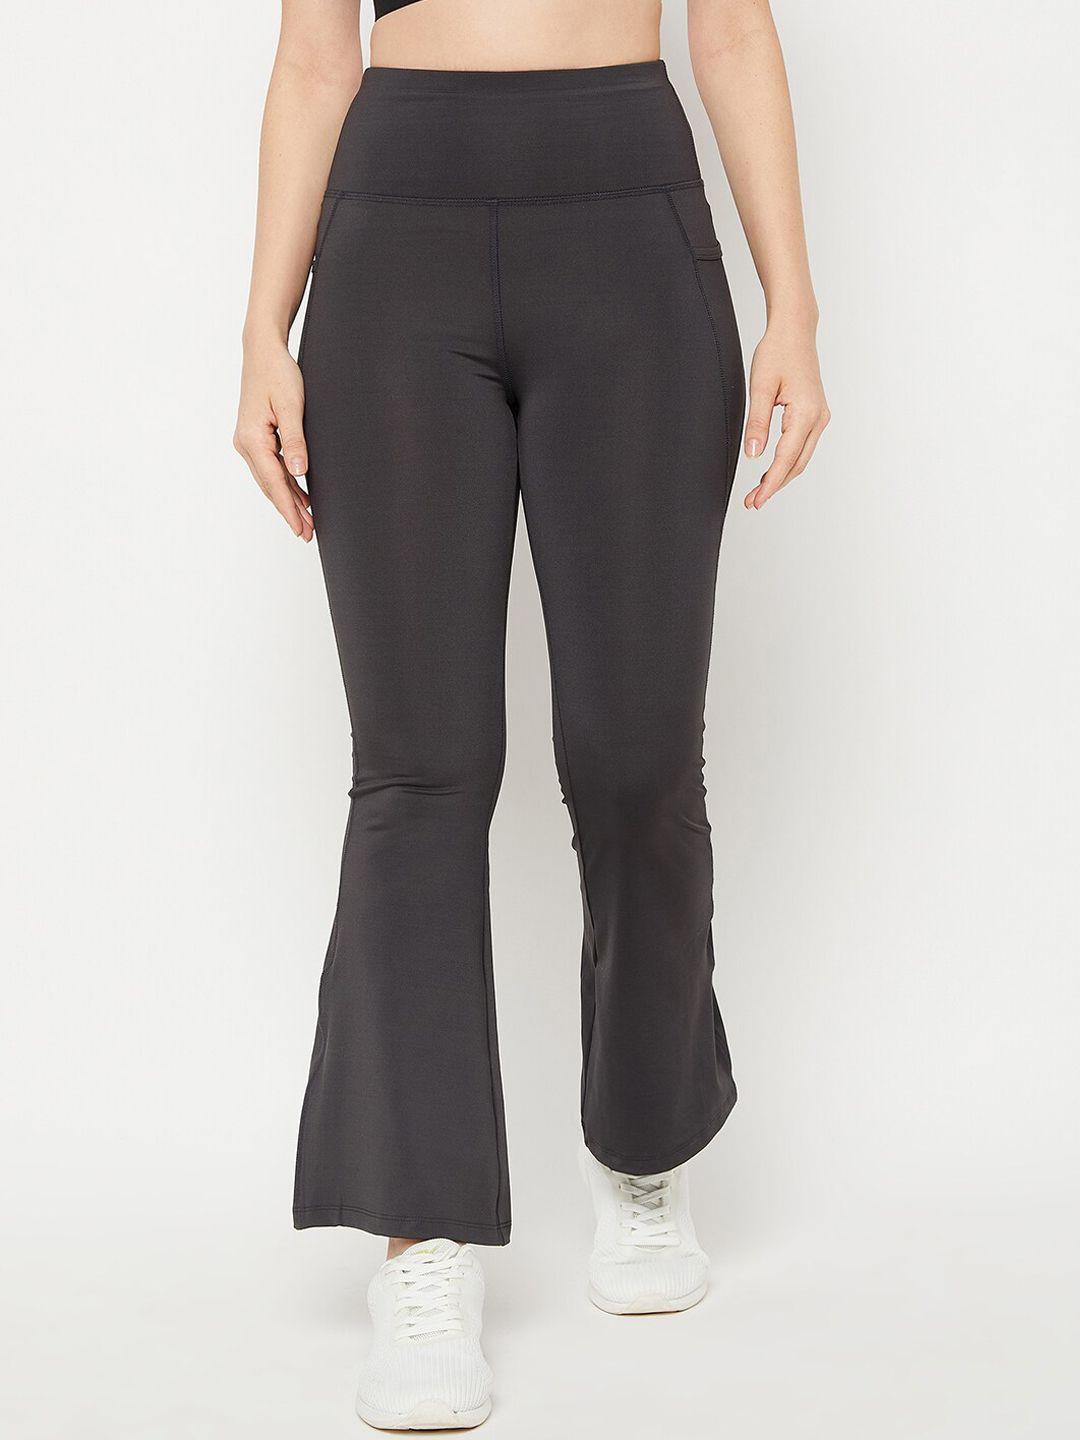 athlisis-women-grey-solid-rapid-dry-regular-fit-track-pants